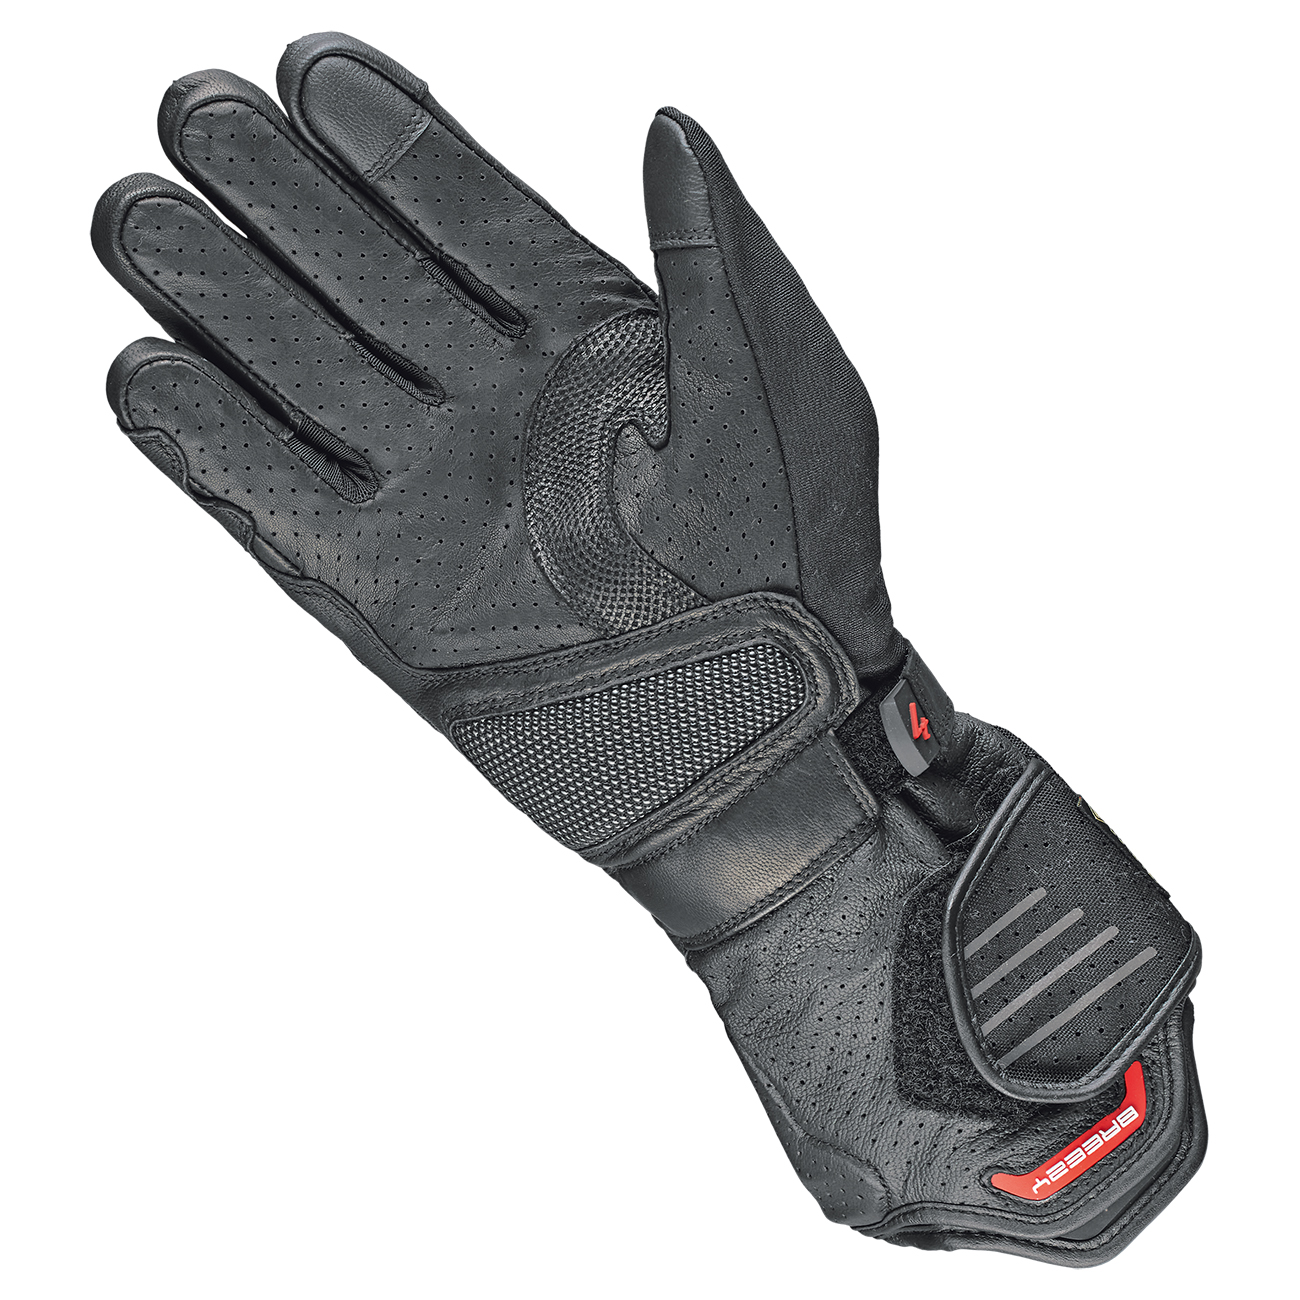 Air n Dry II GORE-TEX® gloves